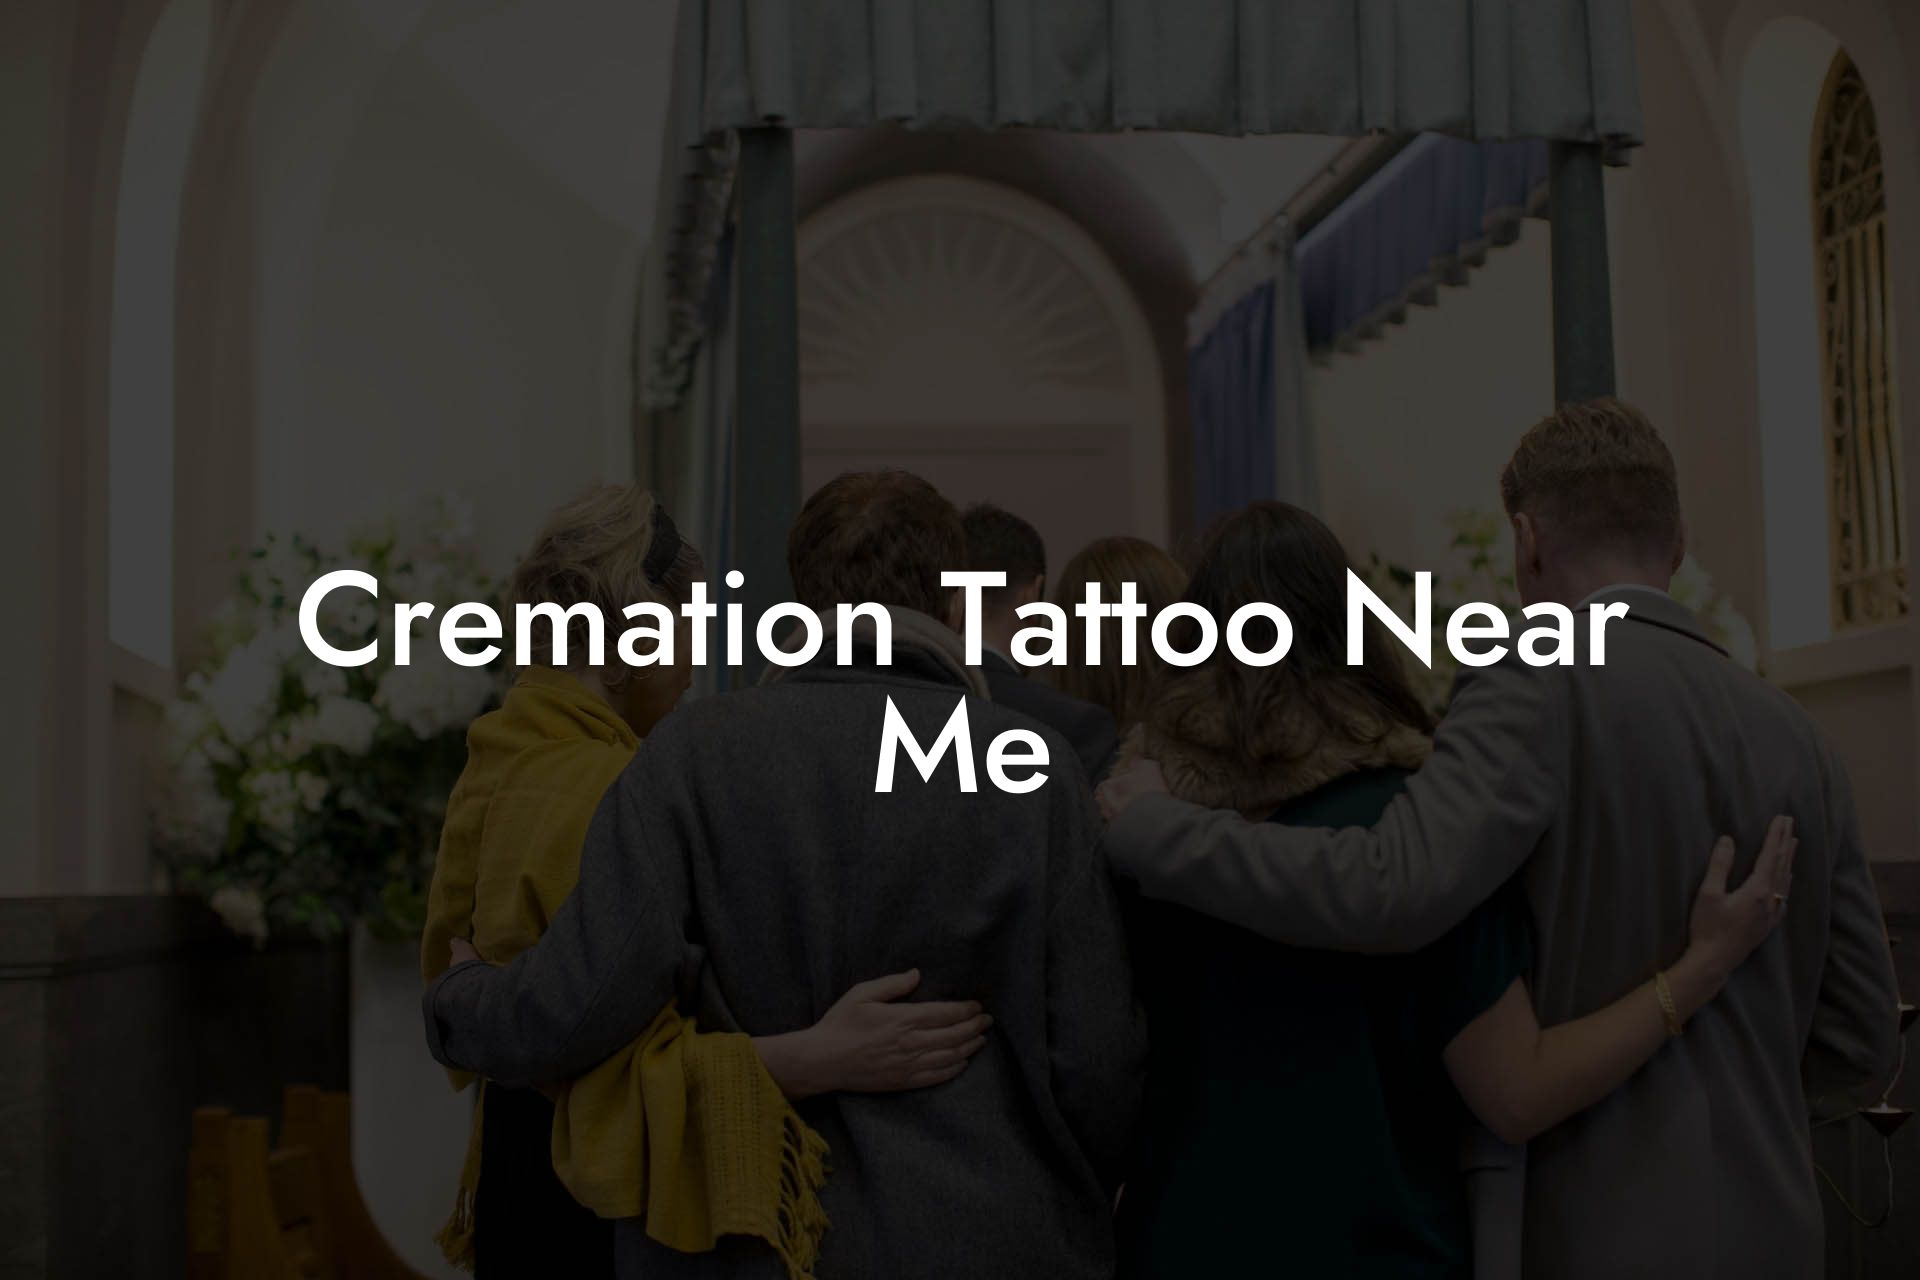 Cremation Tattoo Near Me